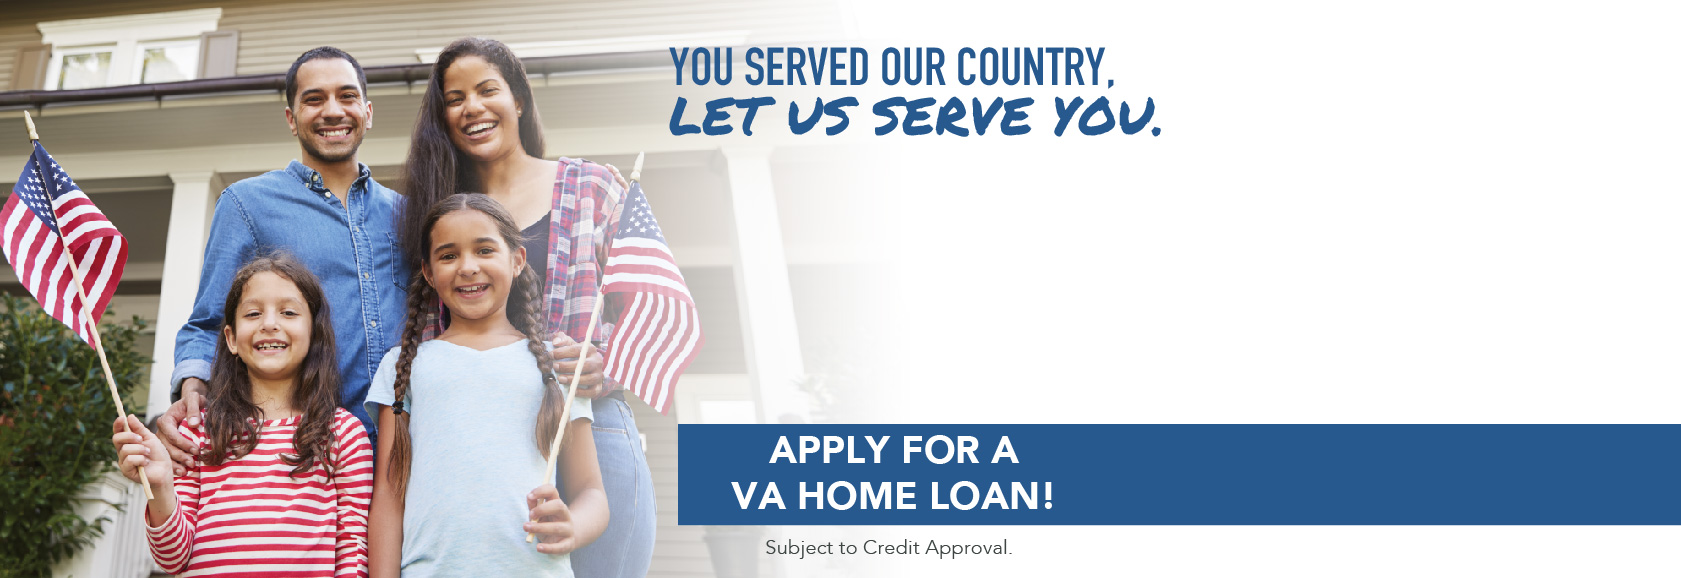 VA mortgage banner ad image